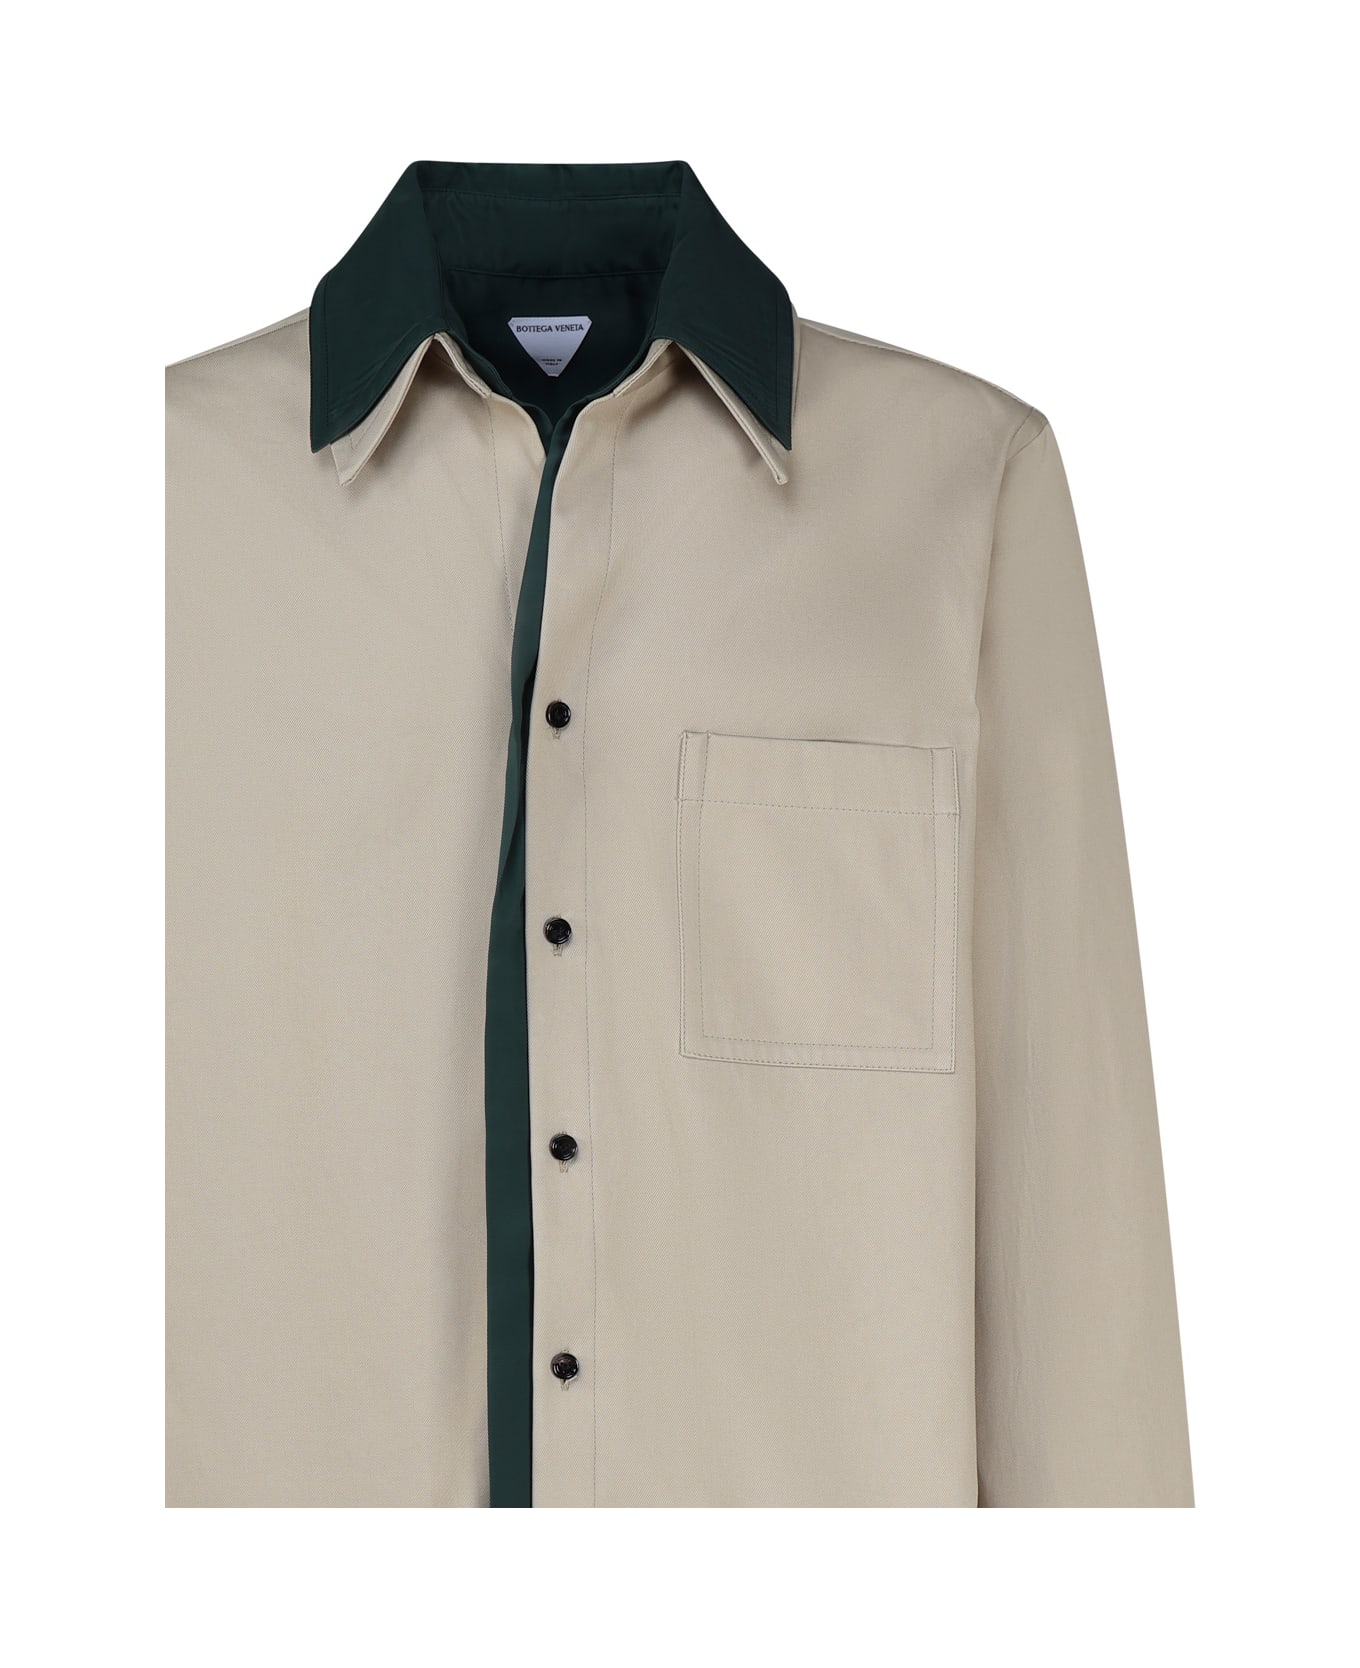 Bottega Veneta Double Layer Cotton Twill Shirt - Travertine/inkwell